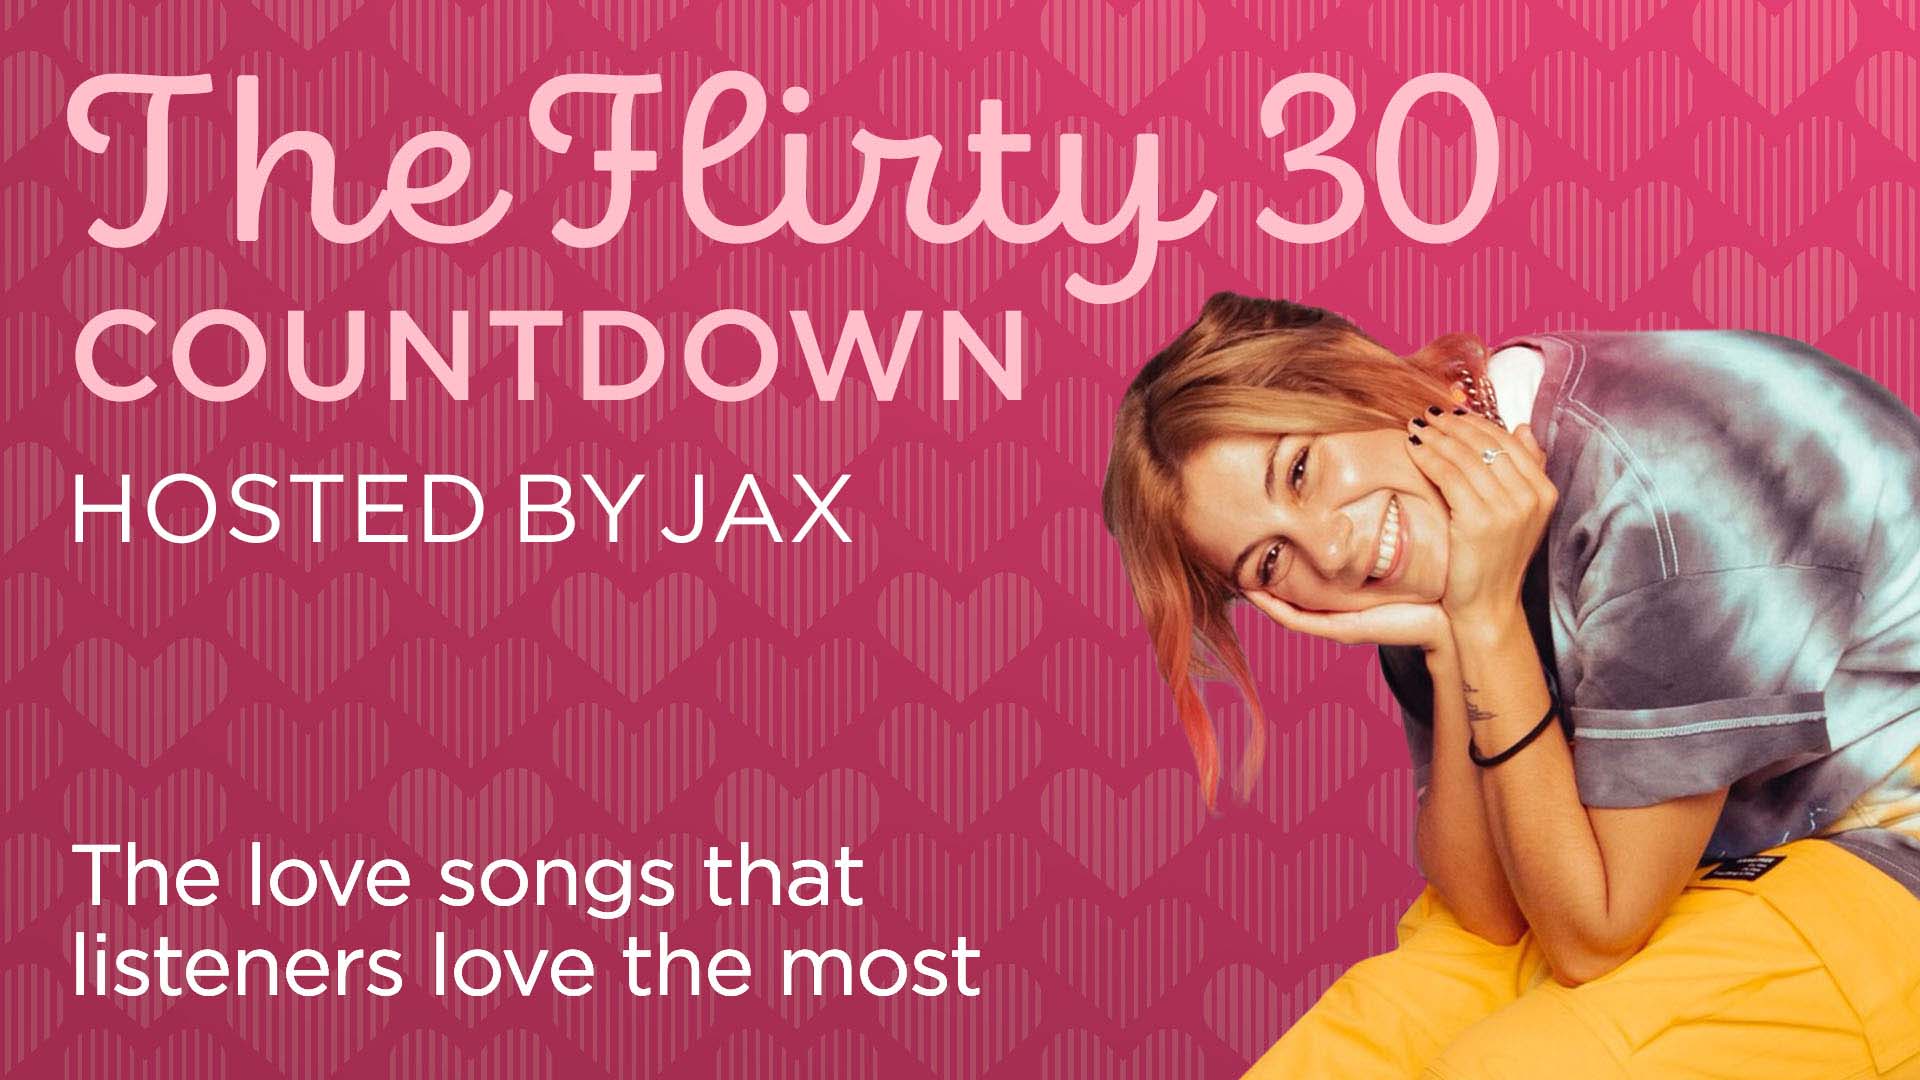 SiriusXM Hits 1 The Flirty 30 Countdown hosted by JAX